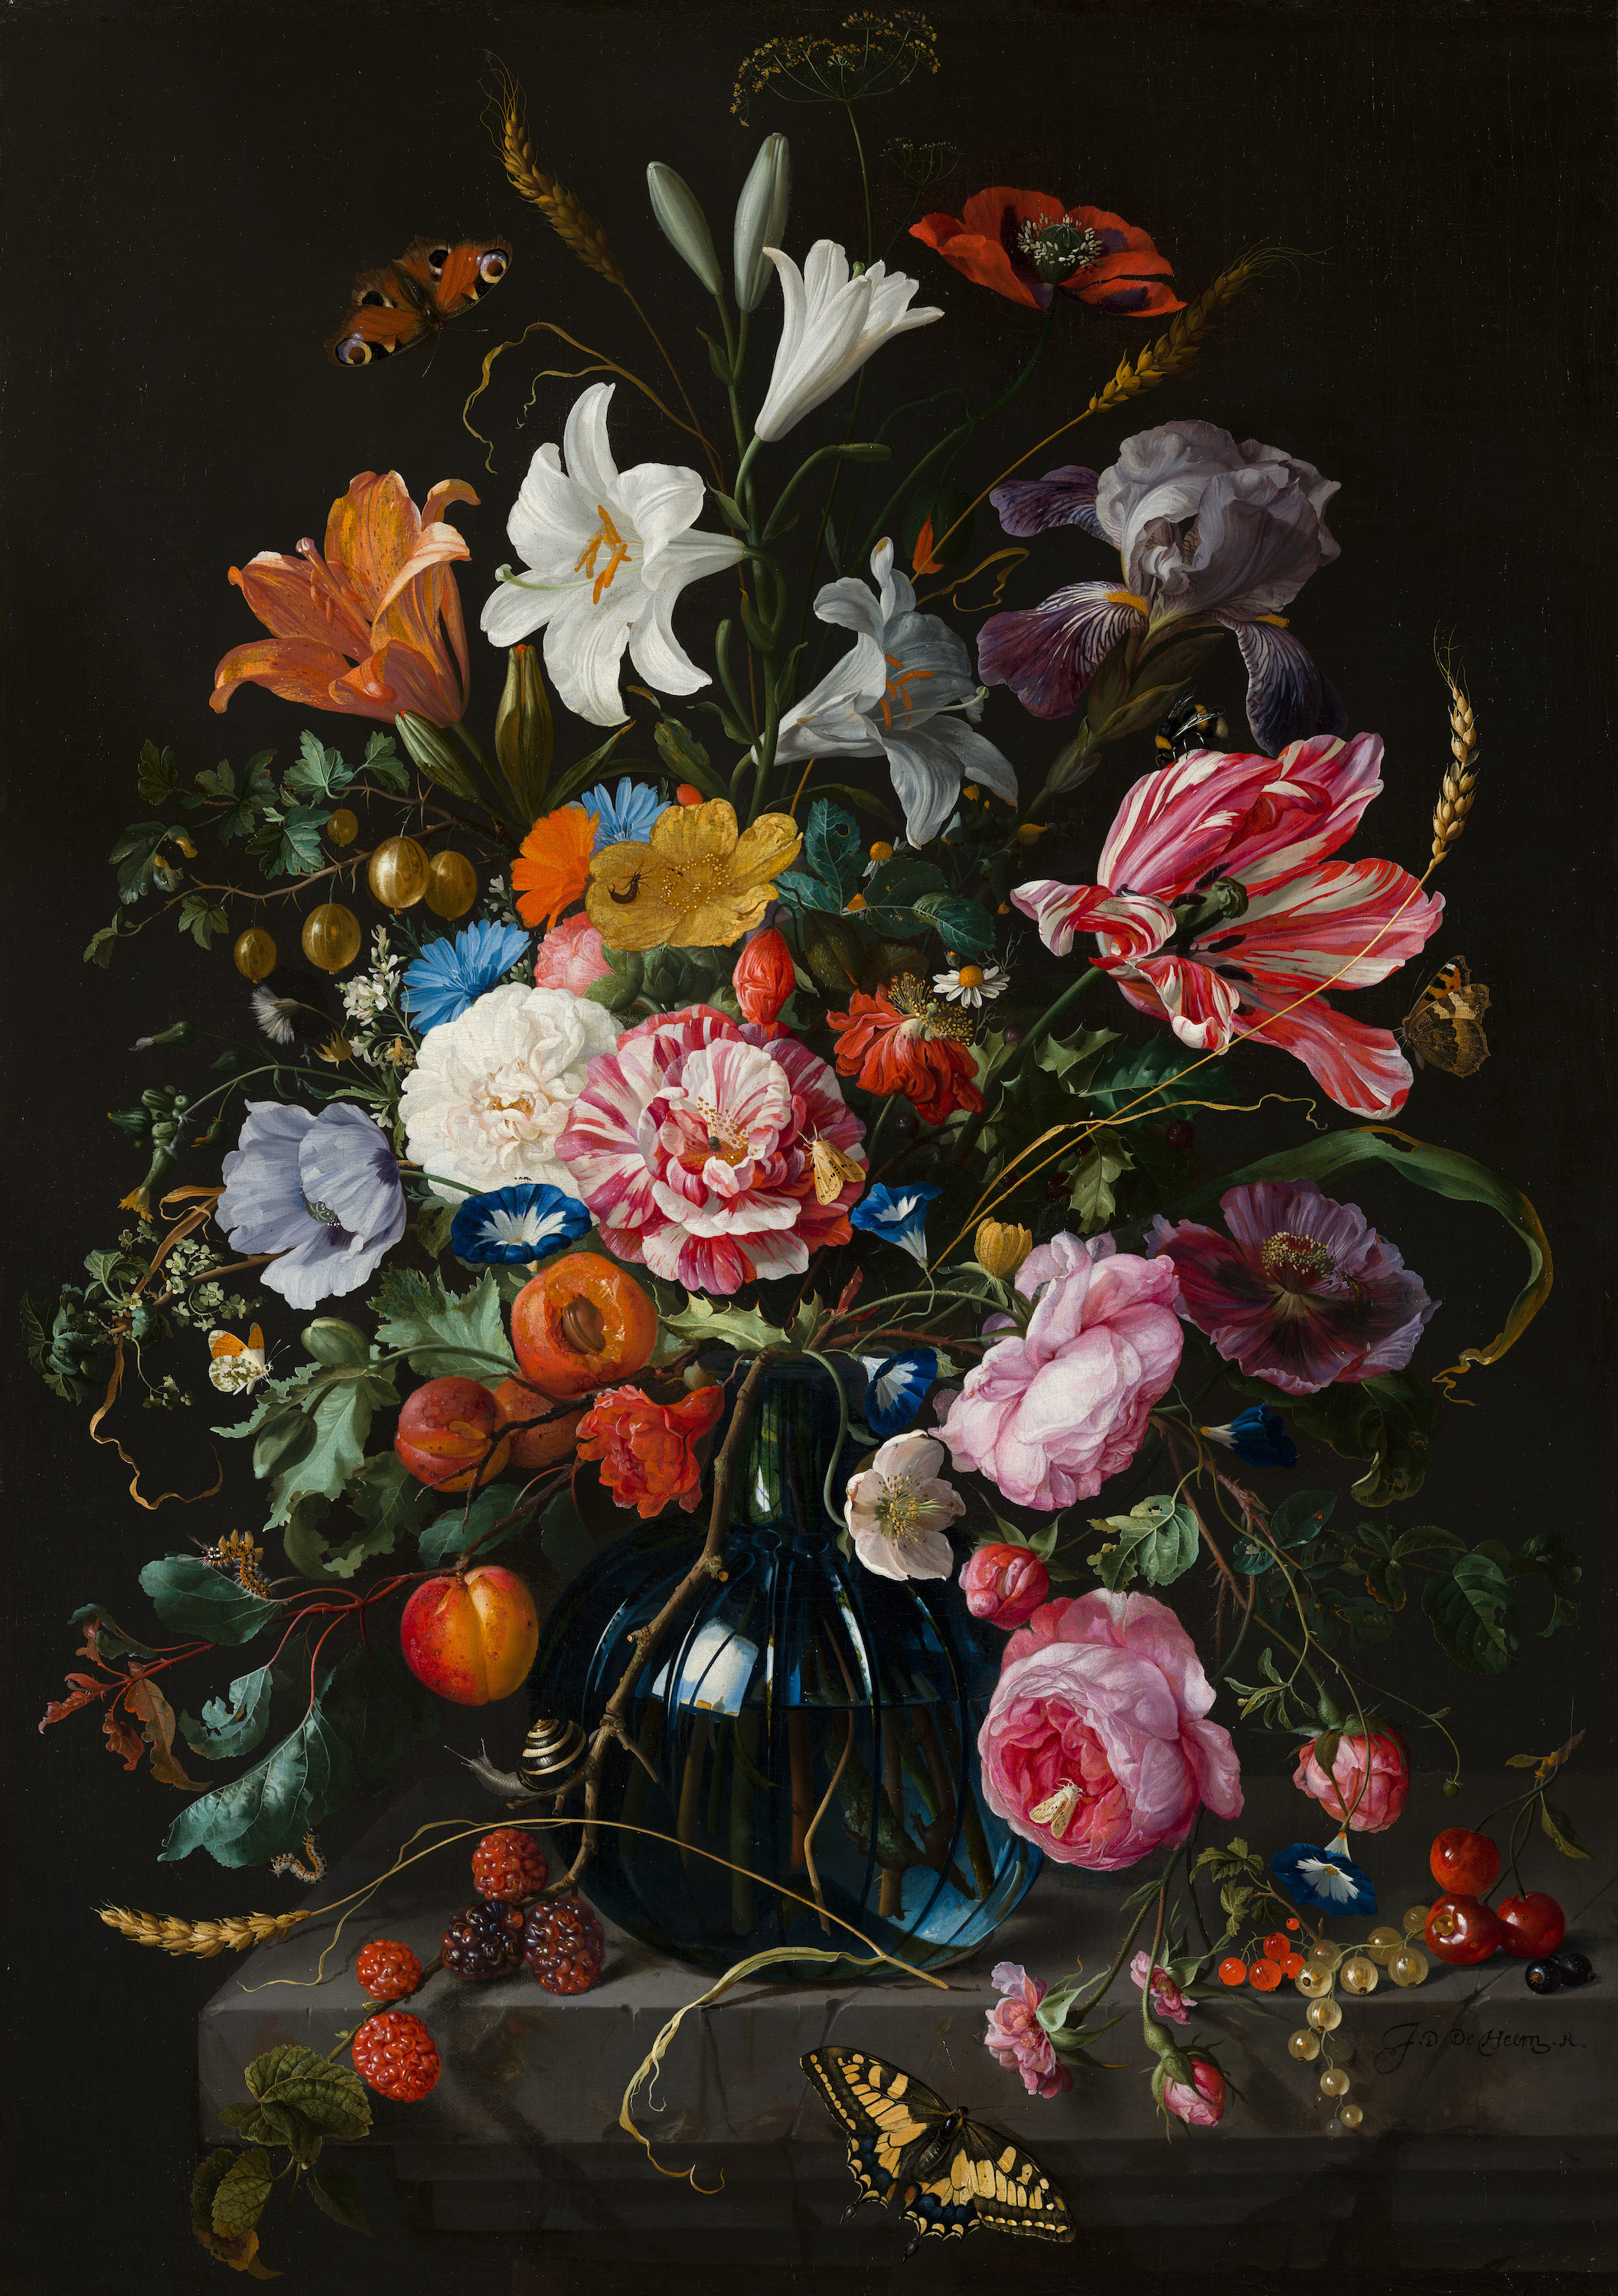 Virágok vázában by Jan Davidsz de Heem - 1670 - 52,6 x 74,2 cm 